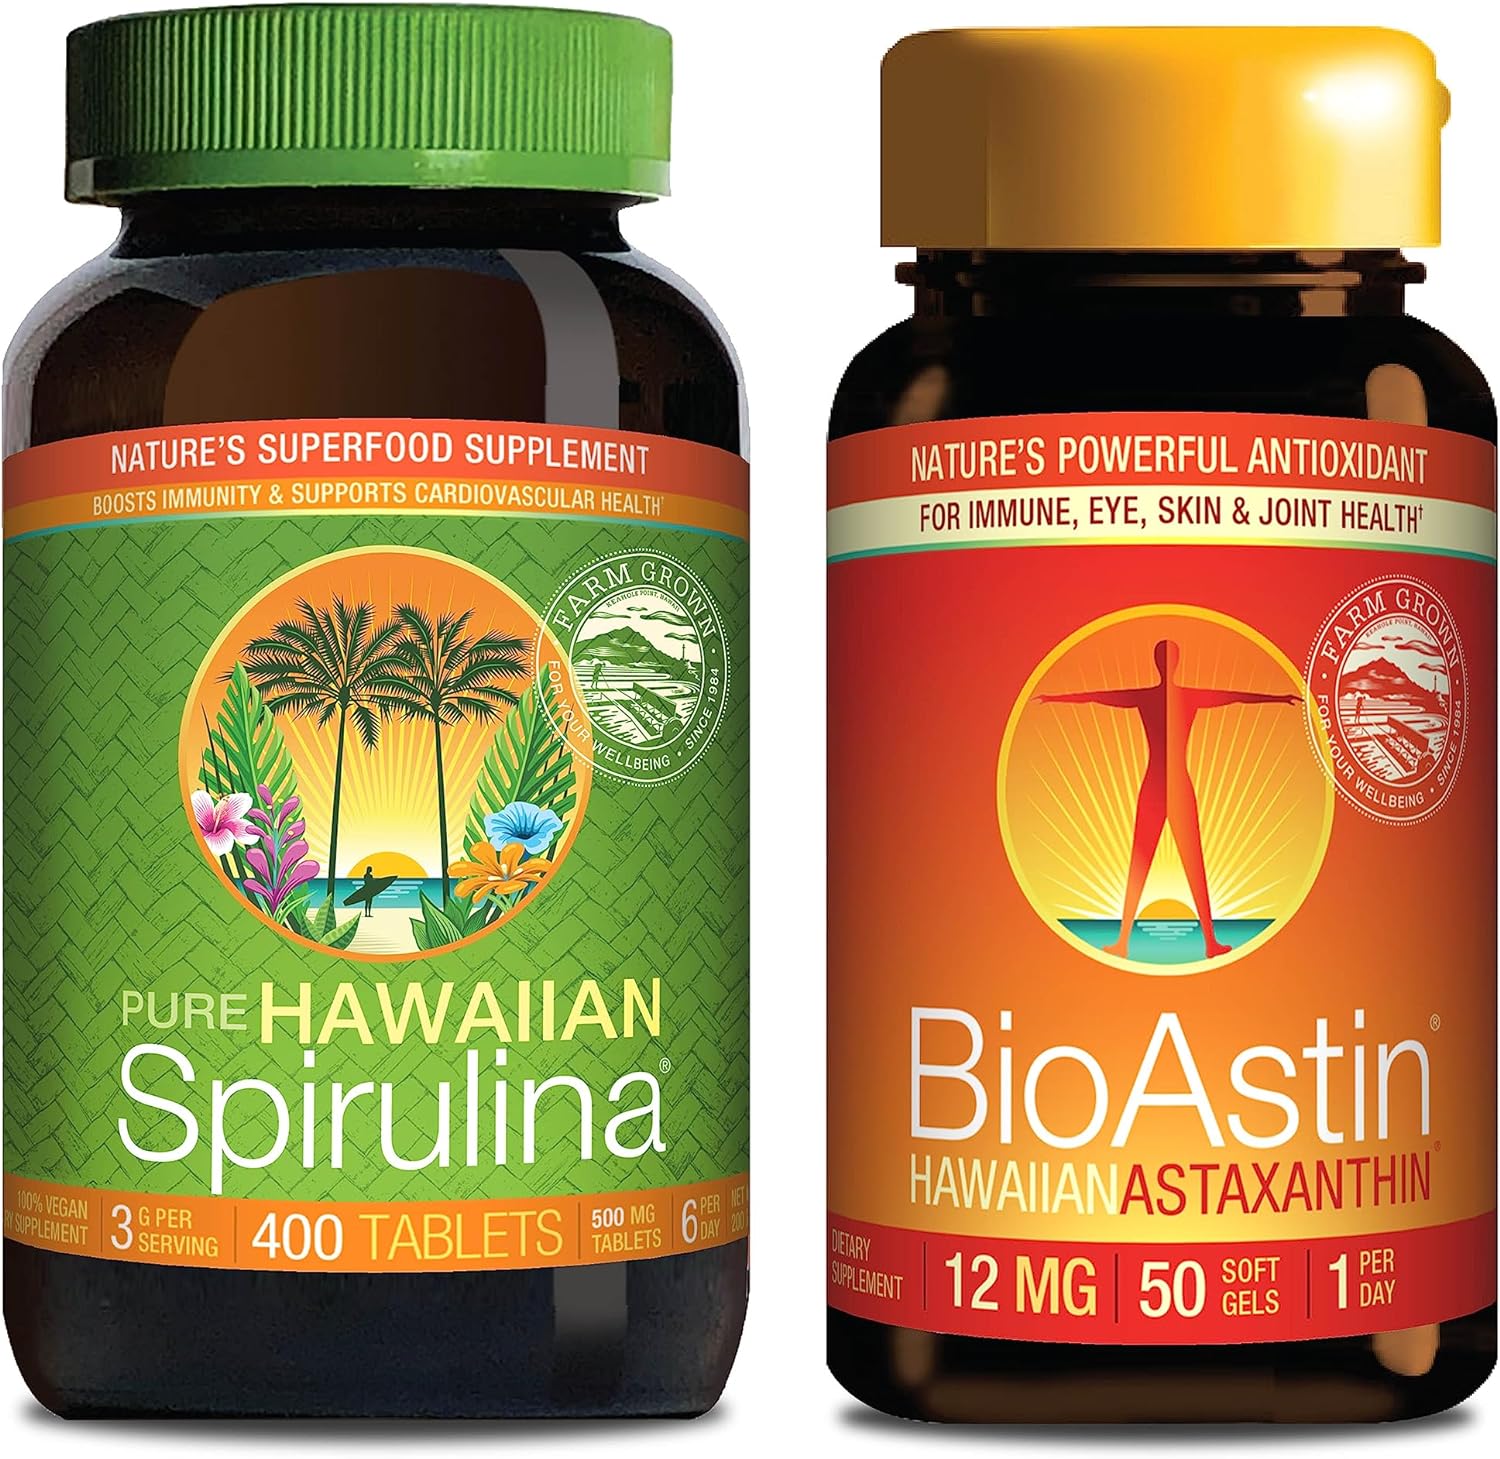 Bioastin Hawaiian Astaxanthin 12mg And Pure Hawaiian Spirulina 500mg Tablets Review Vitamin Reviewer 